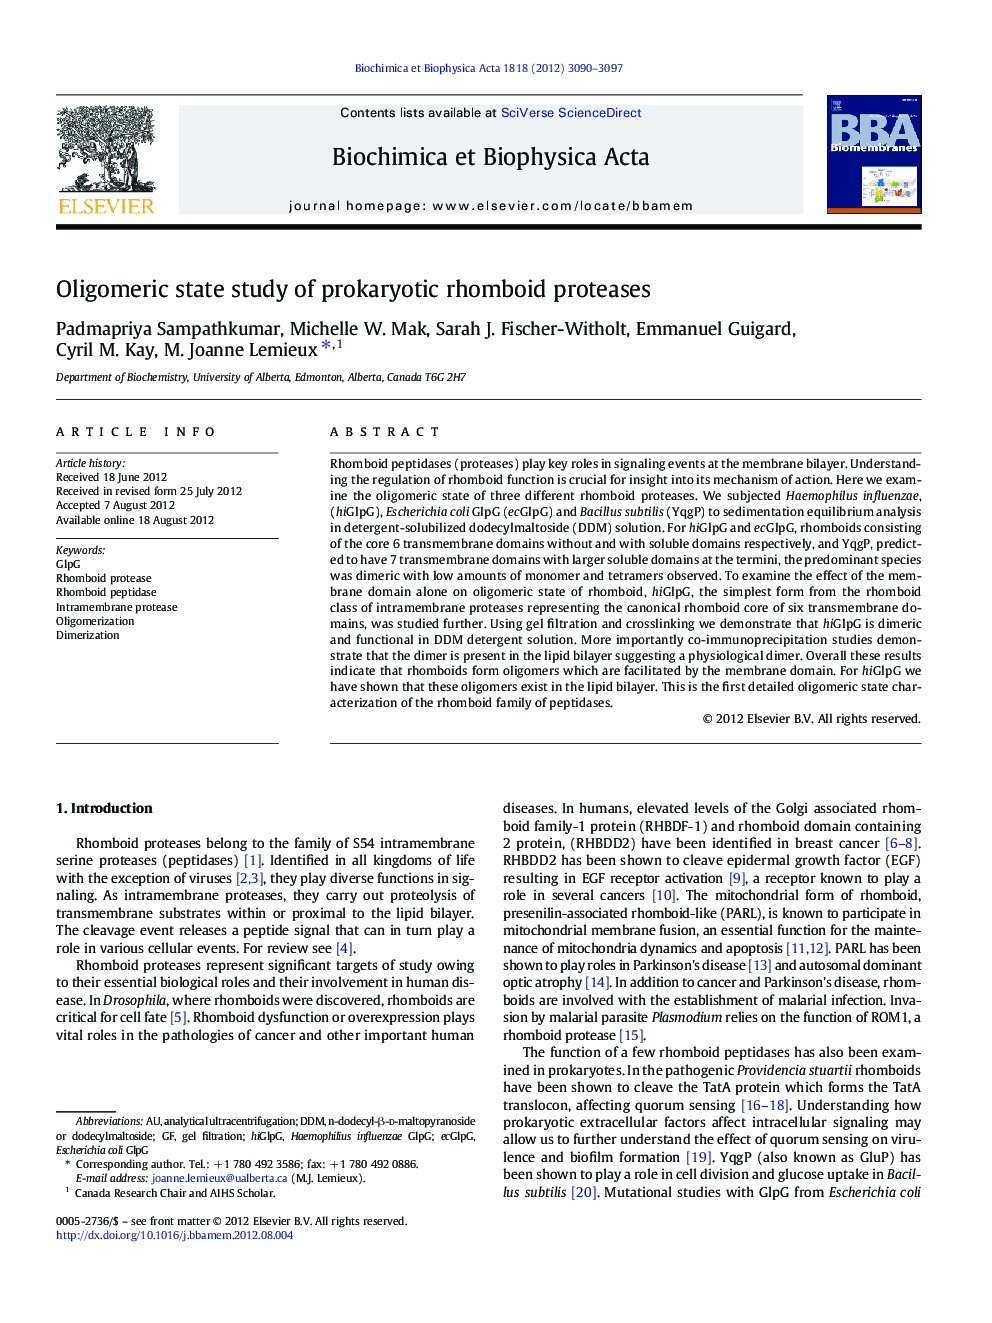 Oligomeric state study of prokaryotic rhomboid proteases